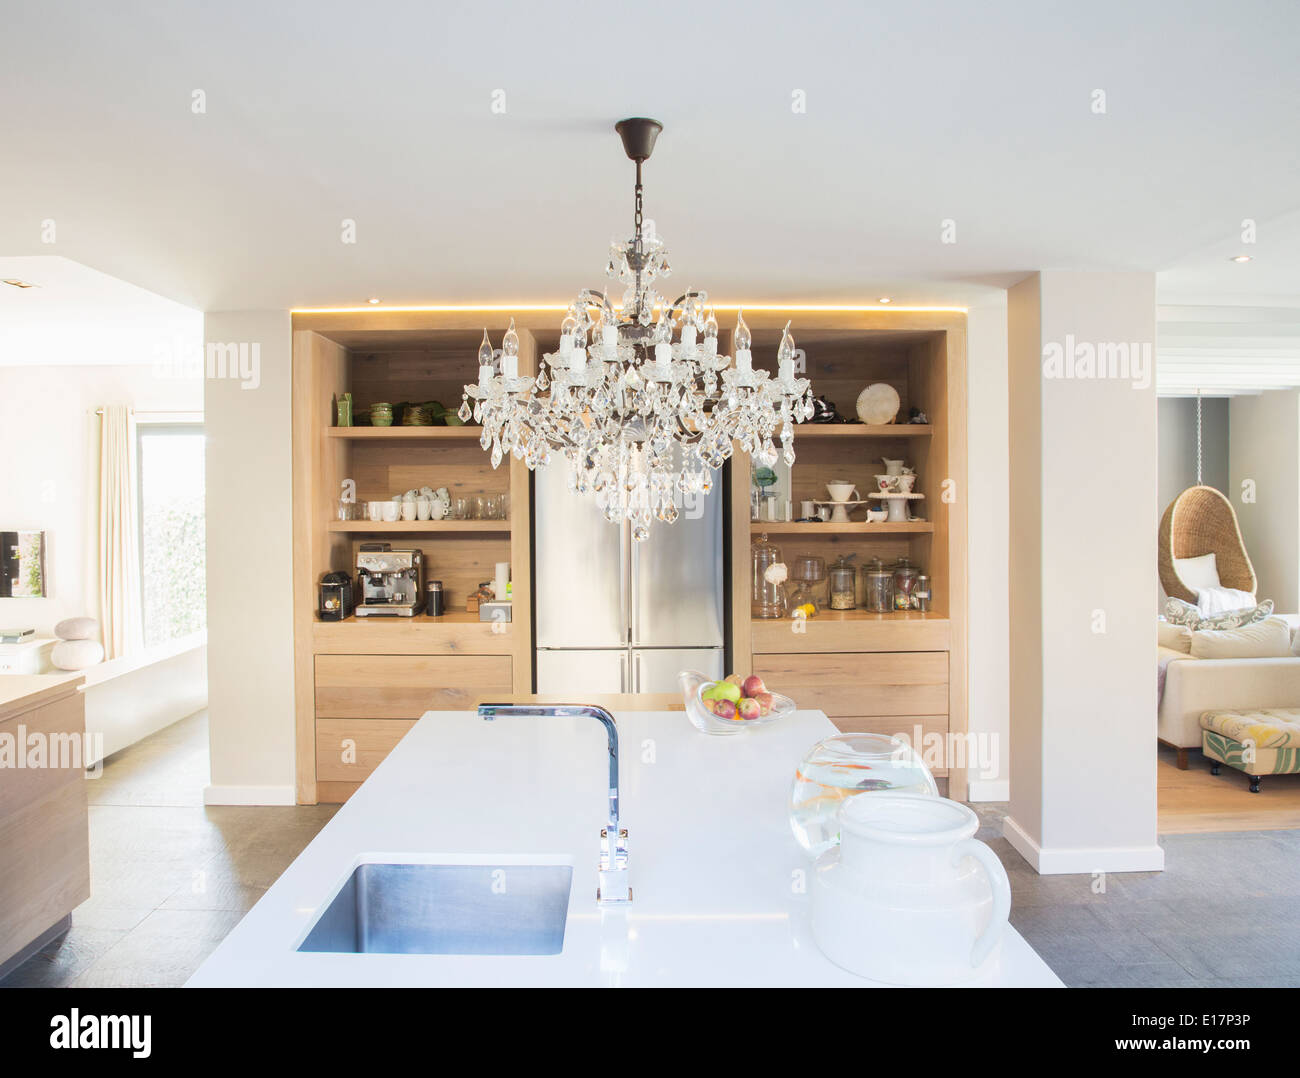 Chandelier hanging over luxury kitchen island Stock Photo